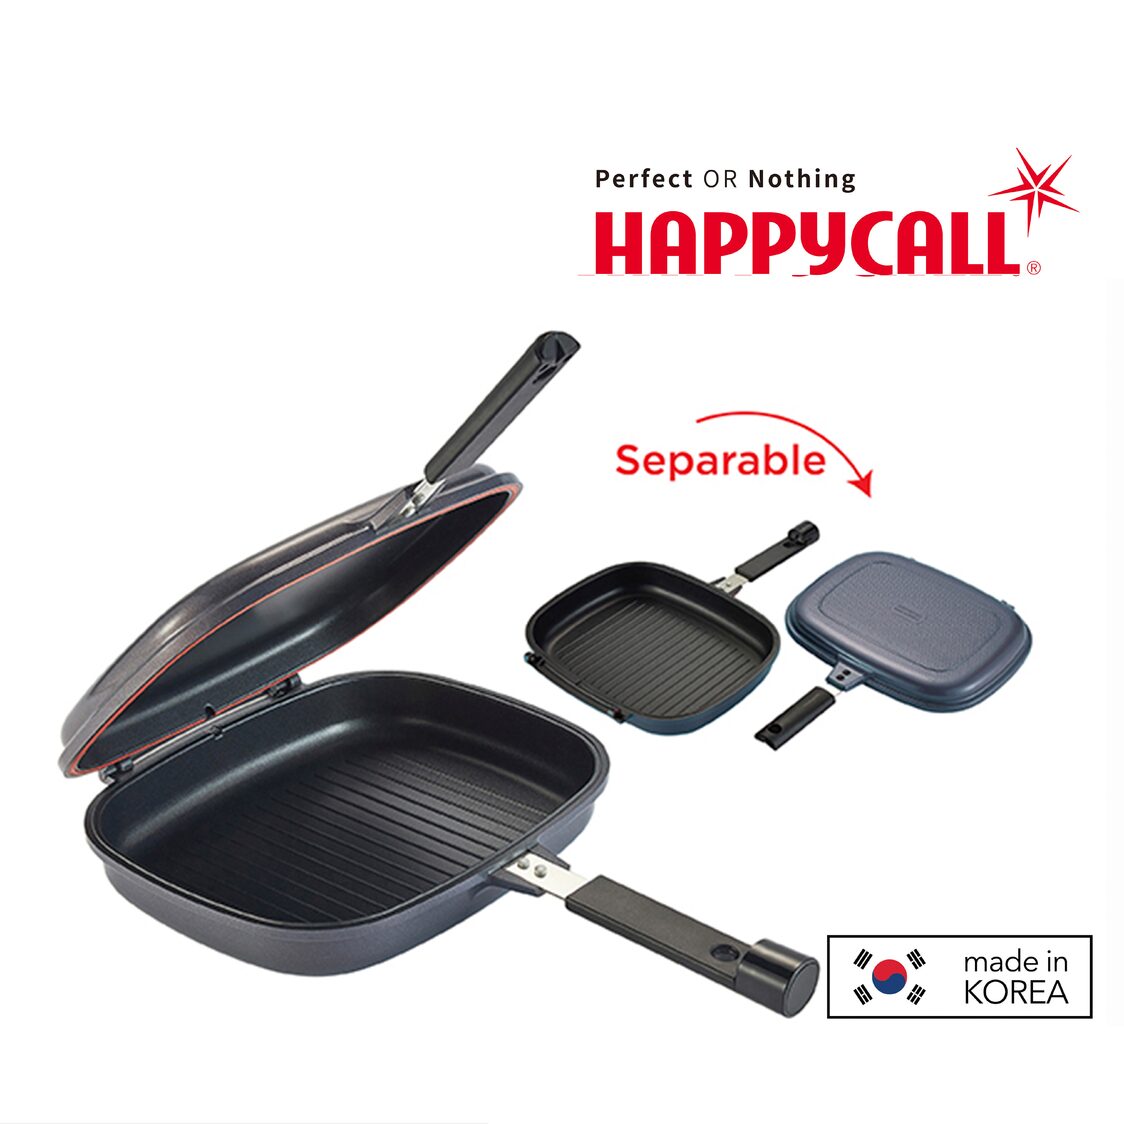 Happycall Double Pan Multi Purpose - Happycall USA